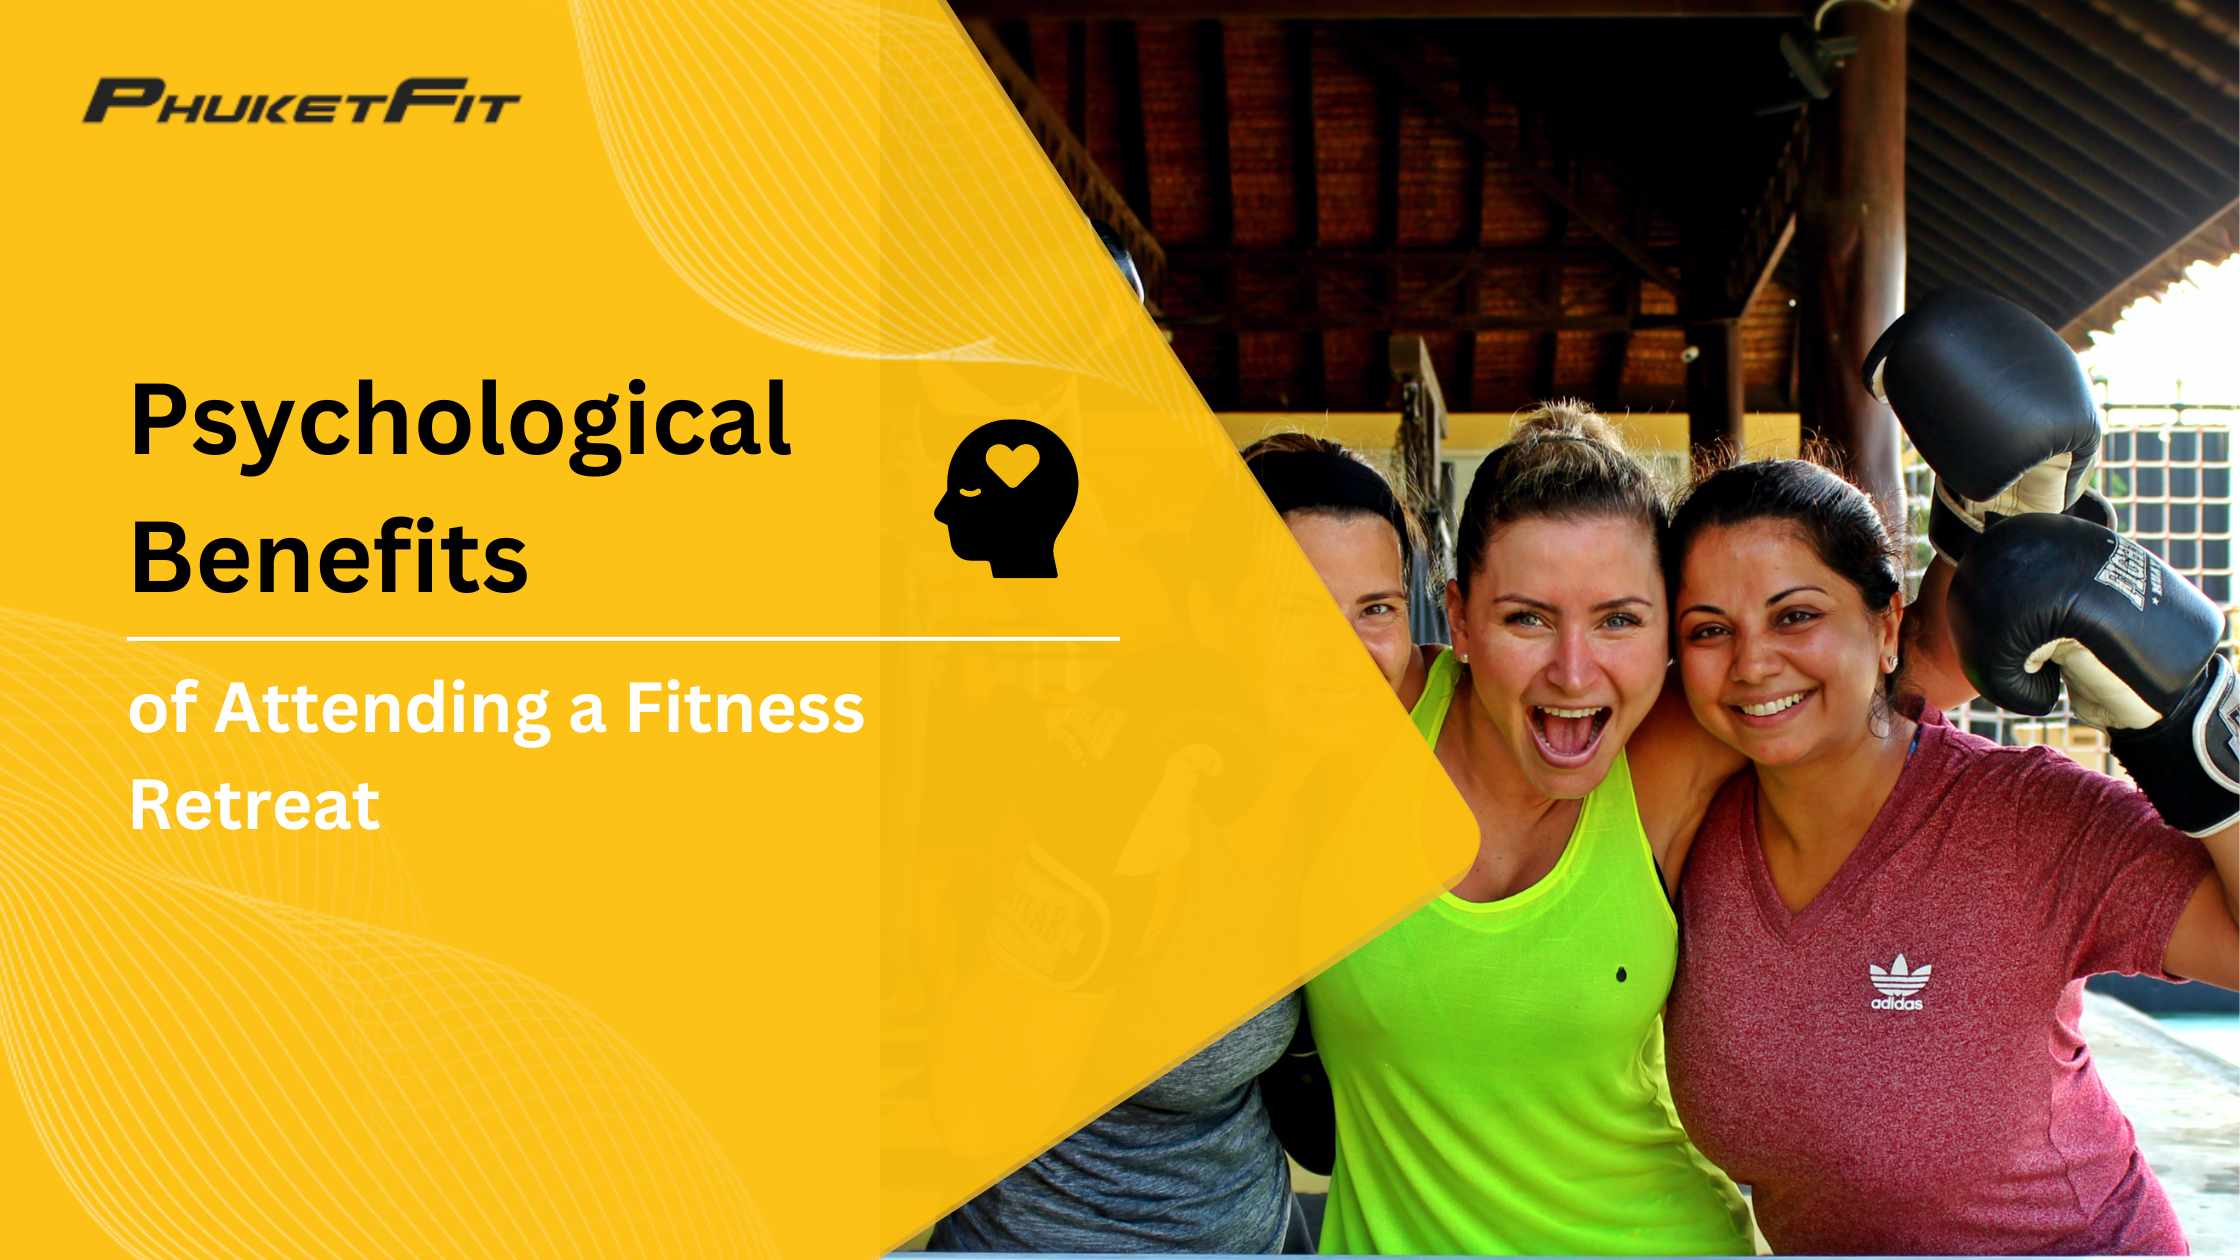 The Psychological Benefits of Attending a Fitness Retreat - PhuketFit